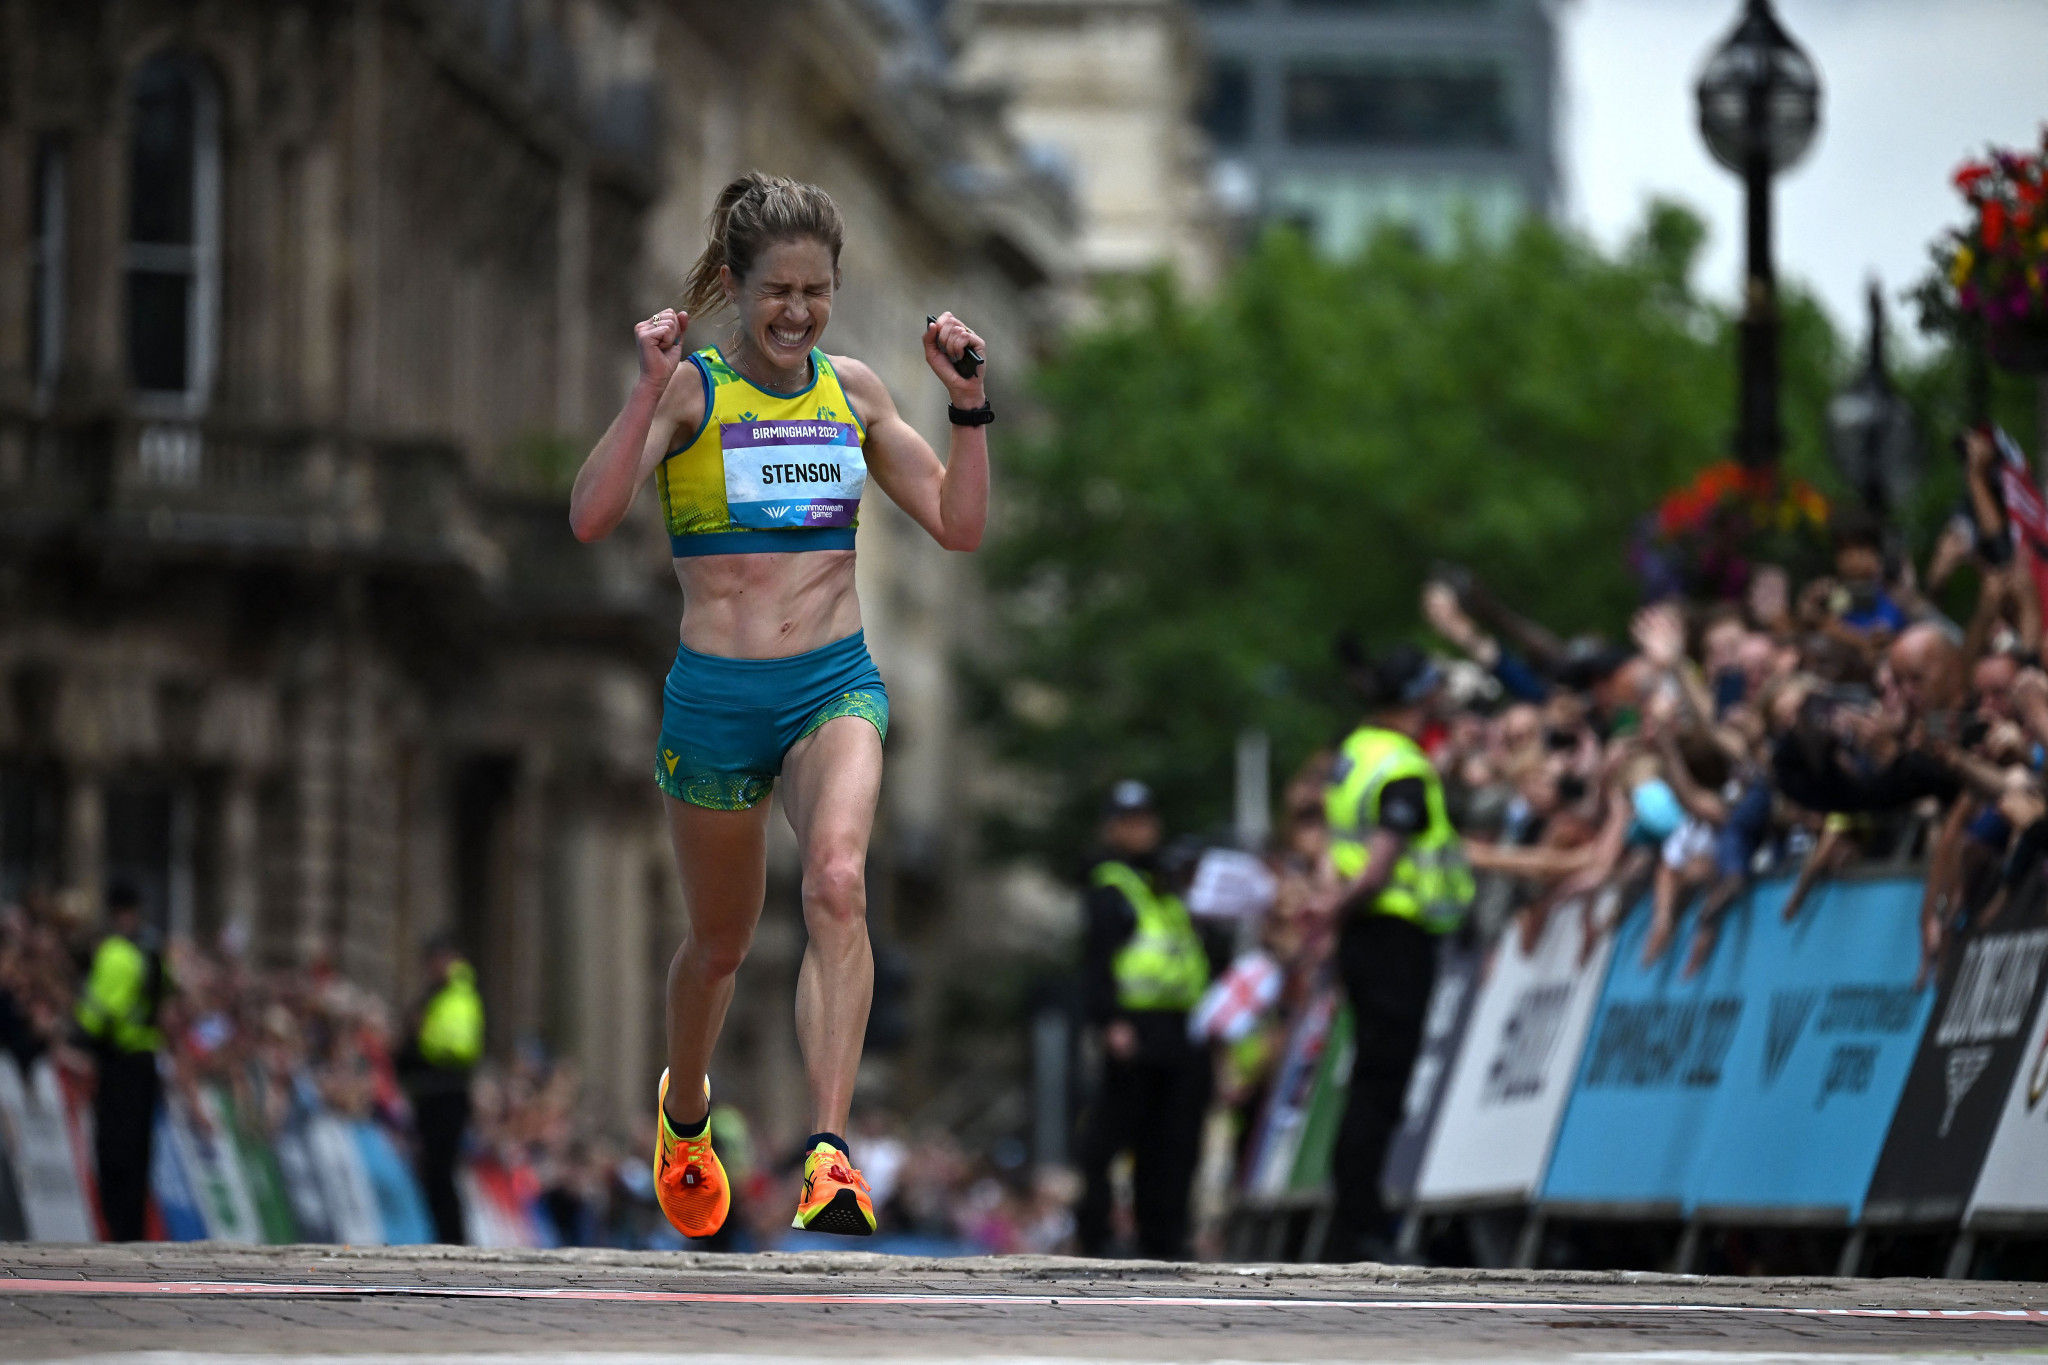 Australia's Jessica Stenson surprised the field by winning the women's marathon ©Getty Images